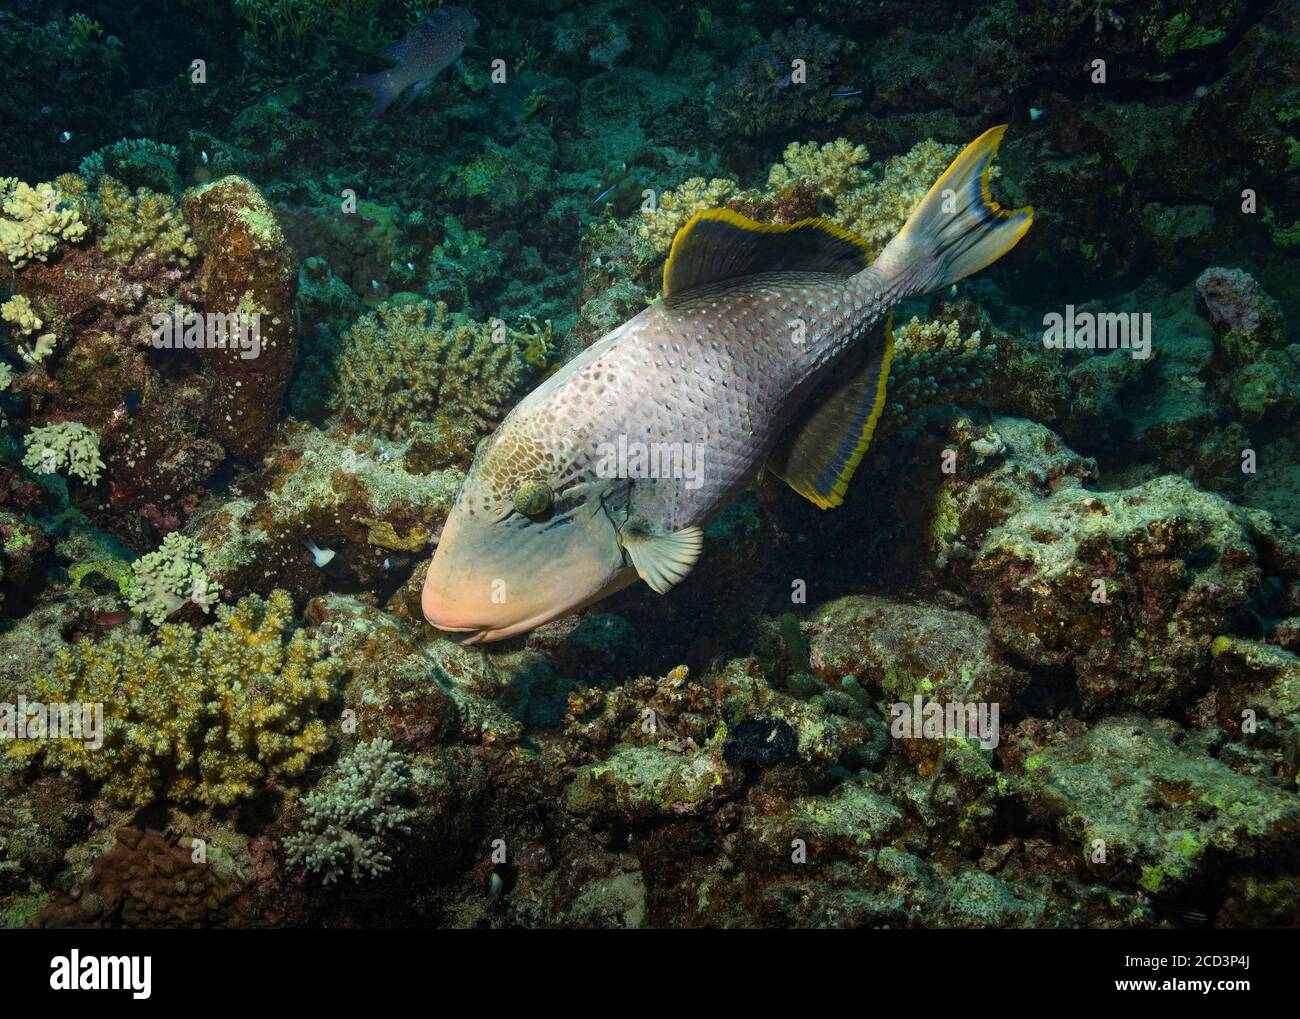 Yellowmargin Triggerfish, Pseudobalistes flavimarginatus, on reef in Marsa Alam, Red Sea, Egypt Stock Photo